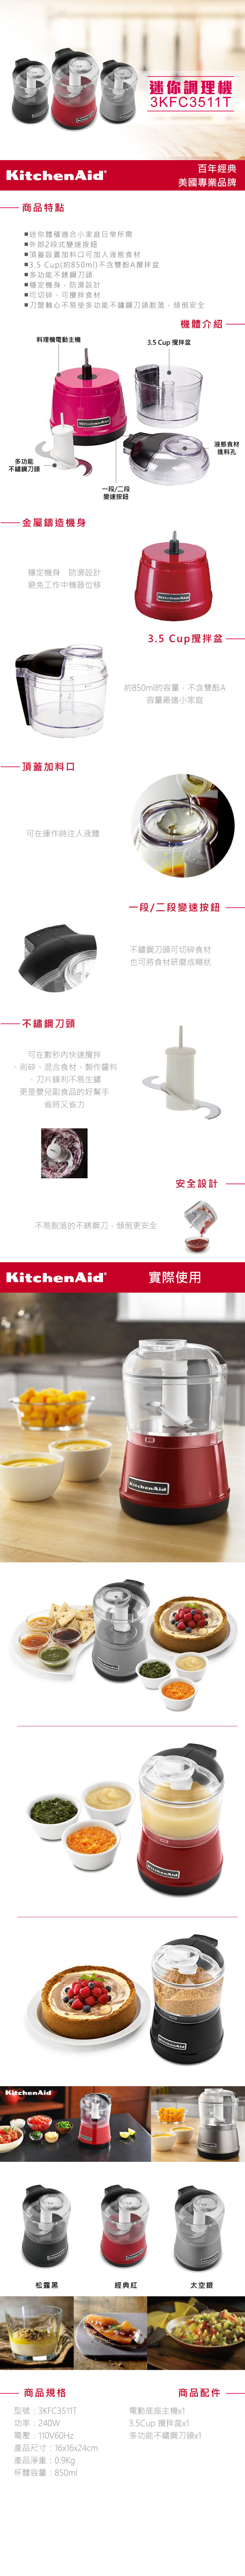 KitchenAid 迷你食物調理機 3KFC3511 太空灰